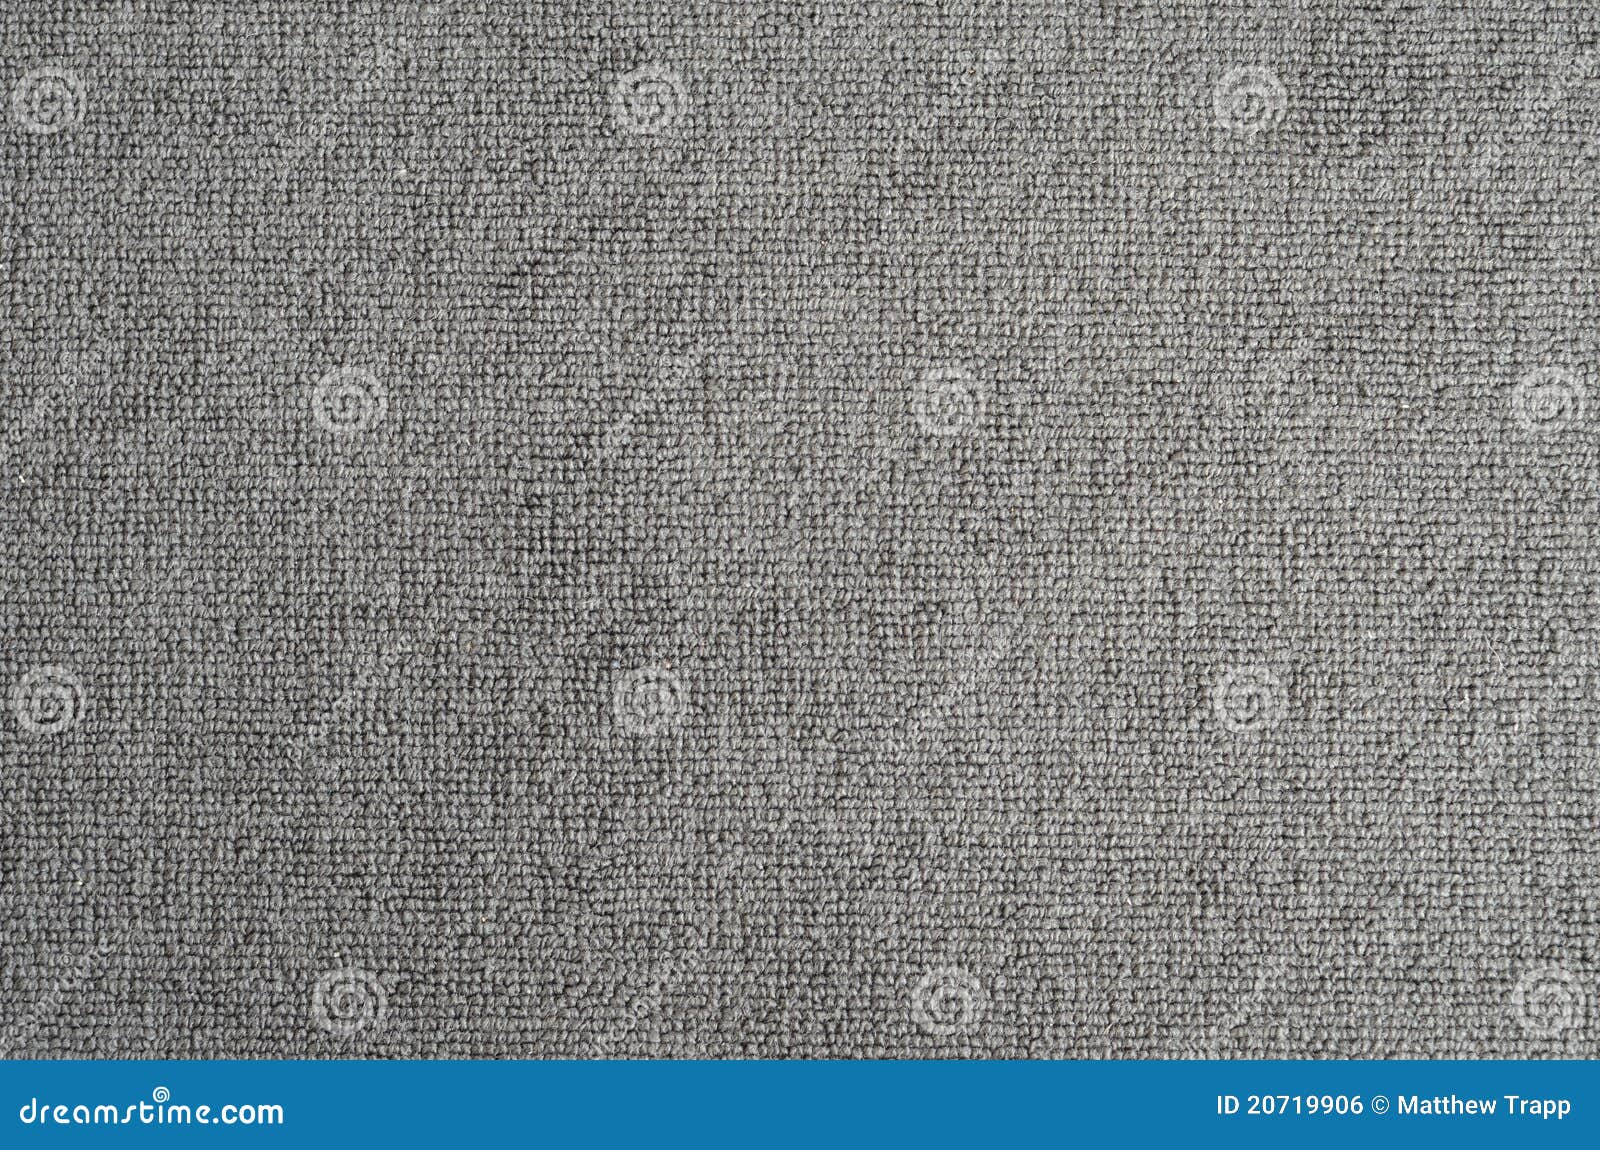 gray carpet texture